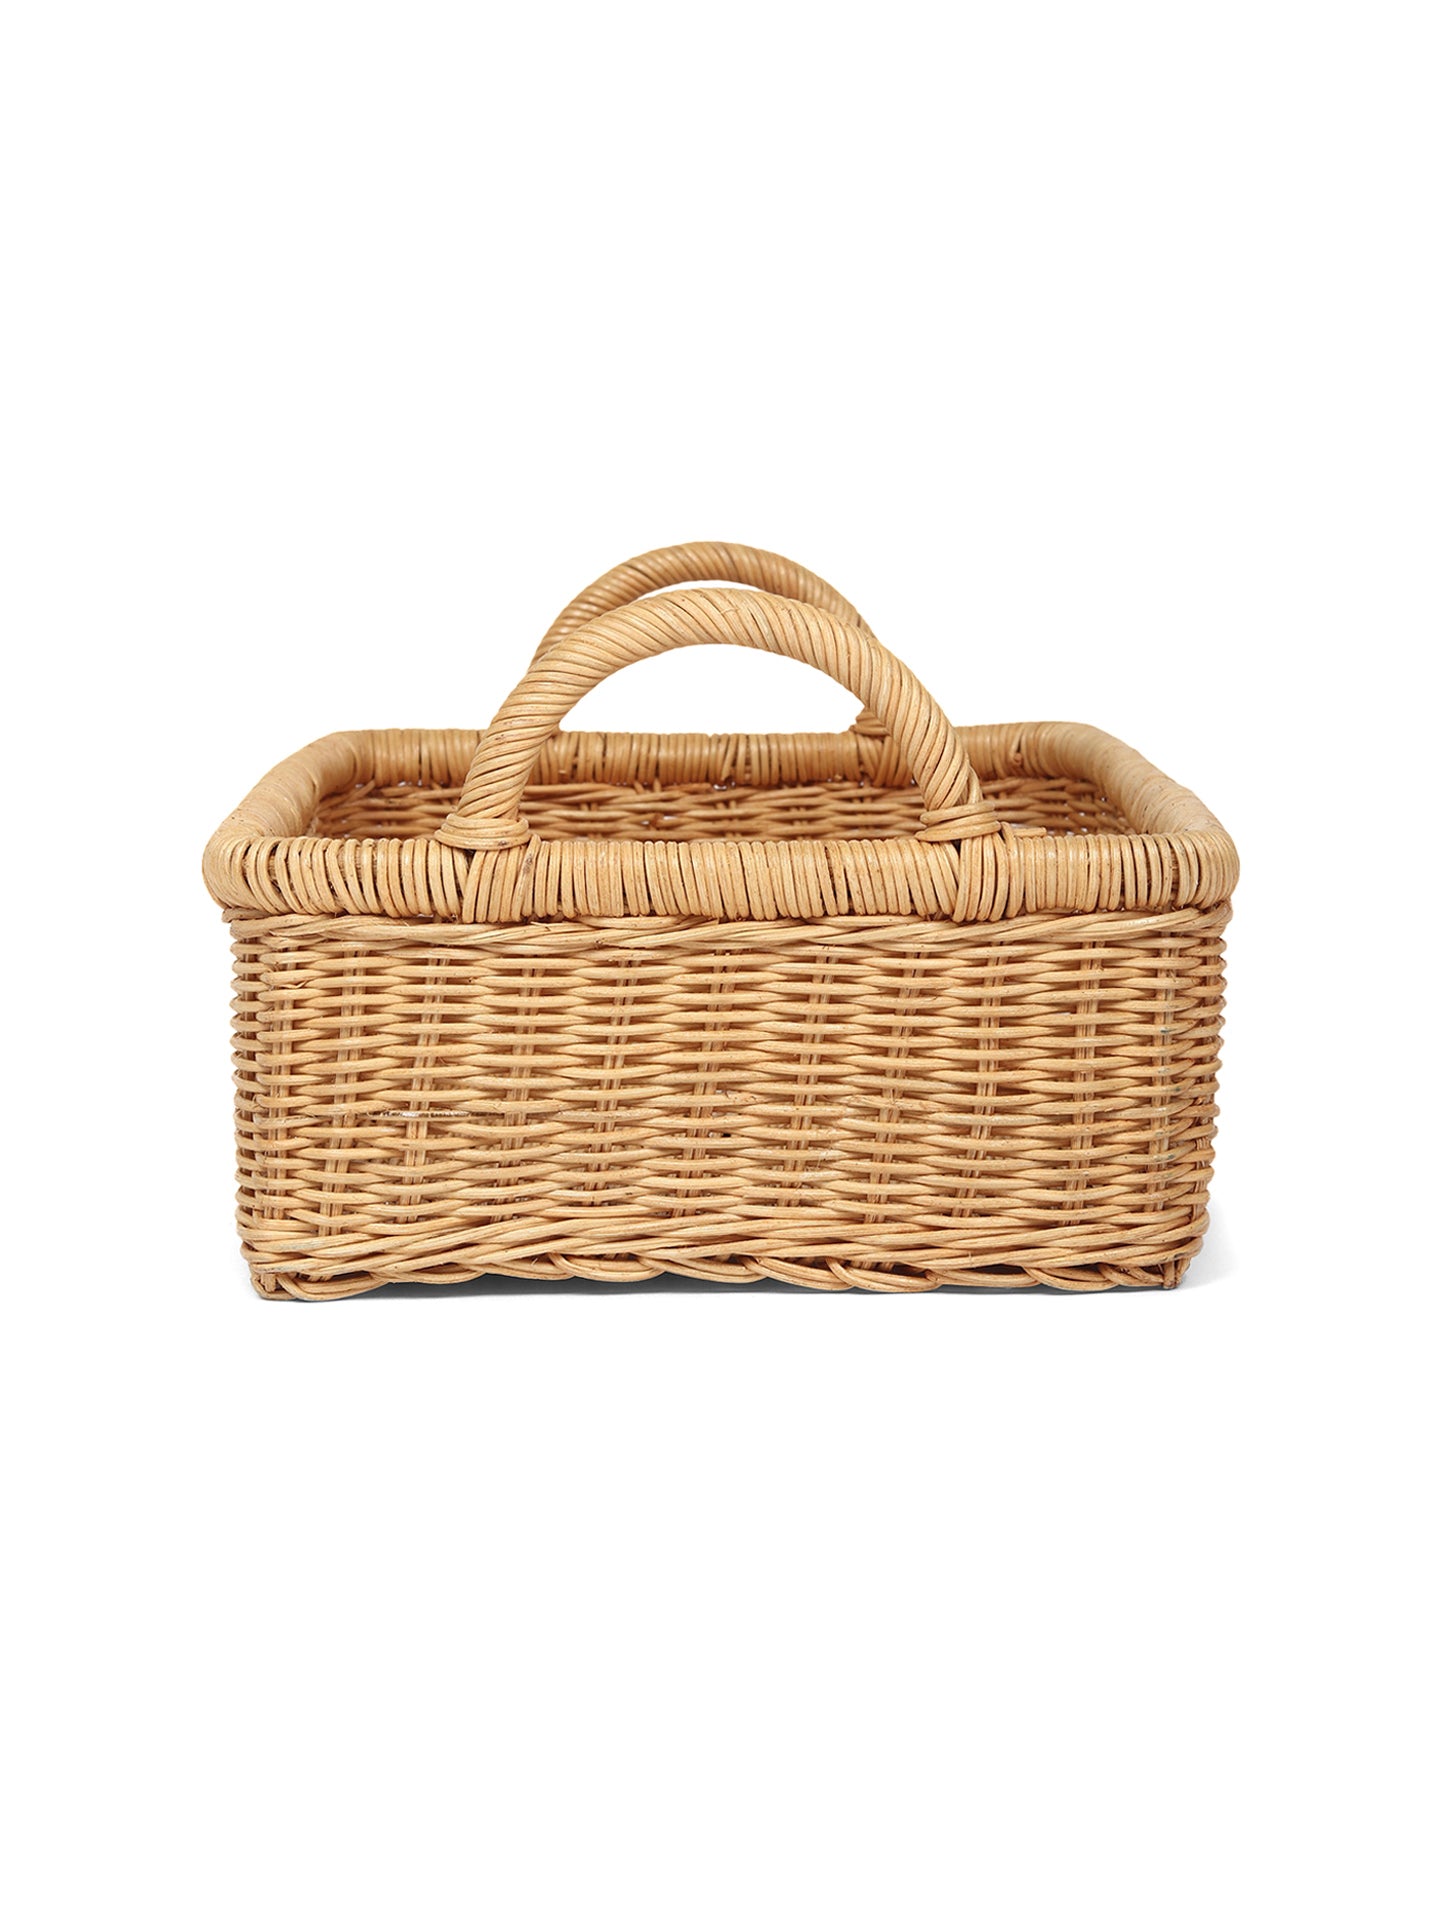 Buy Cane Tray Storage Basket